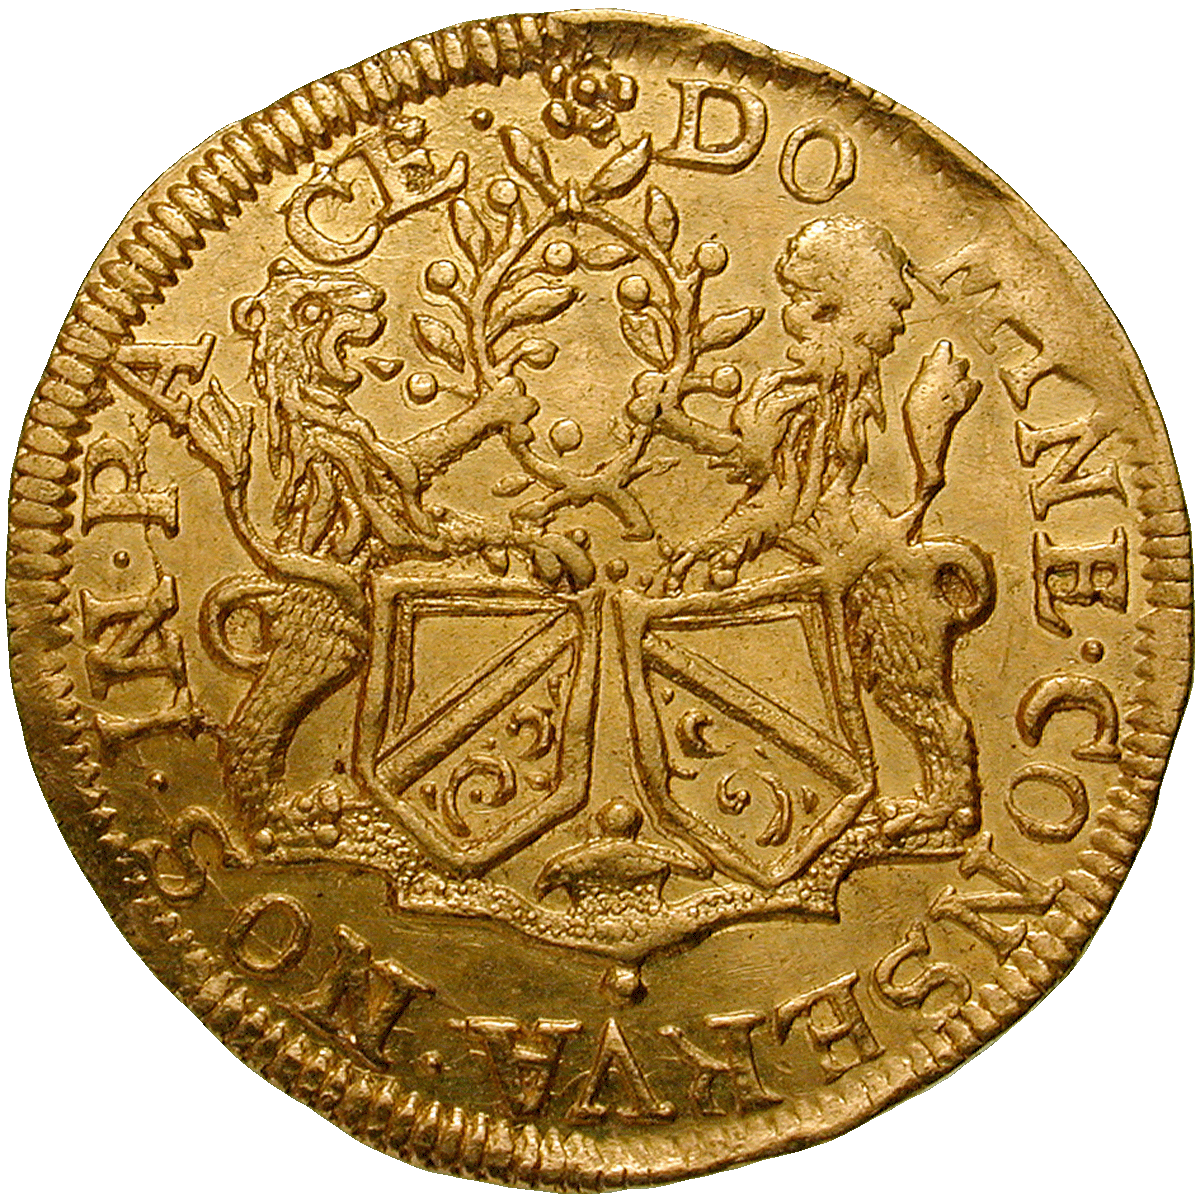 Republic of Zurich, Ducat 1649 (obverse)